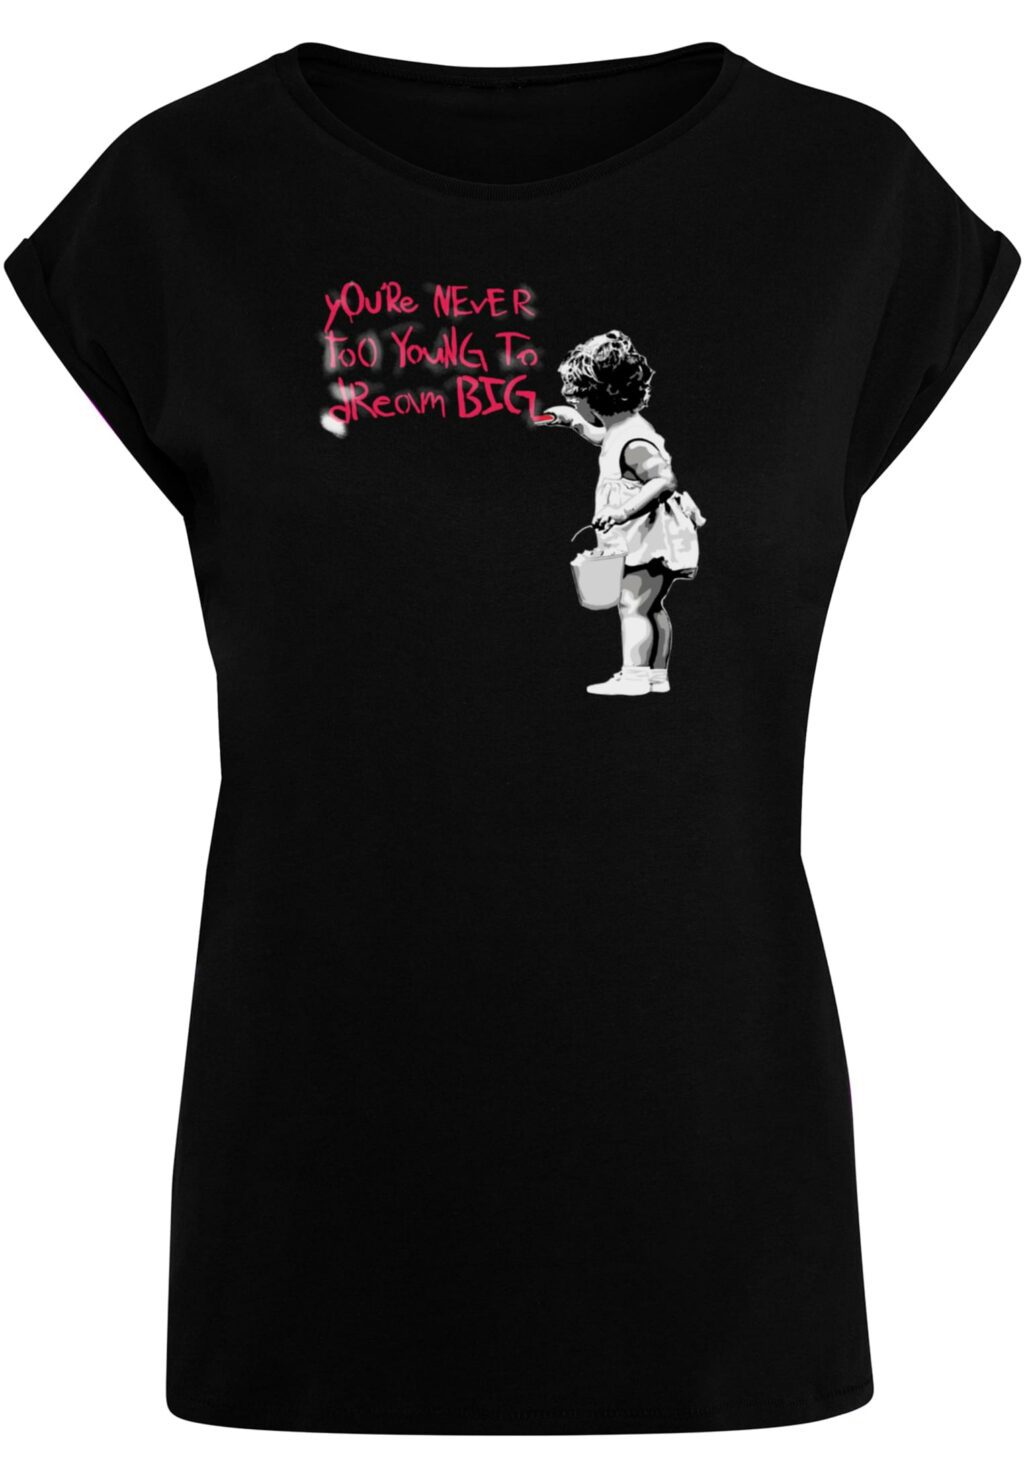 Ladies Dream Big T-Shirt black MP0000432